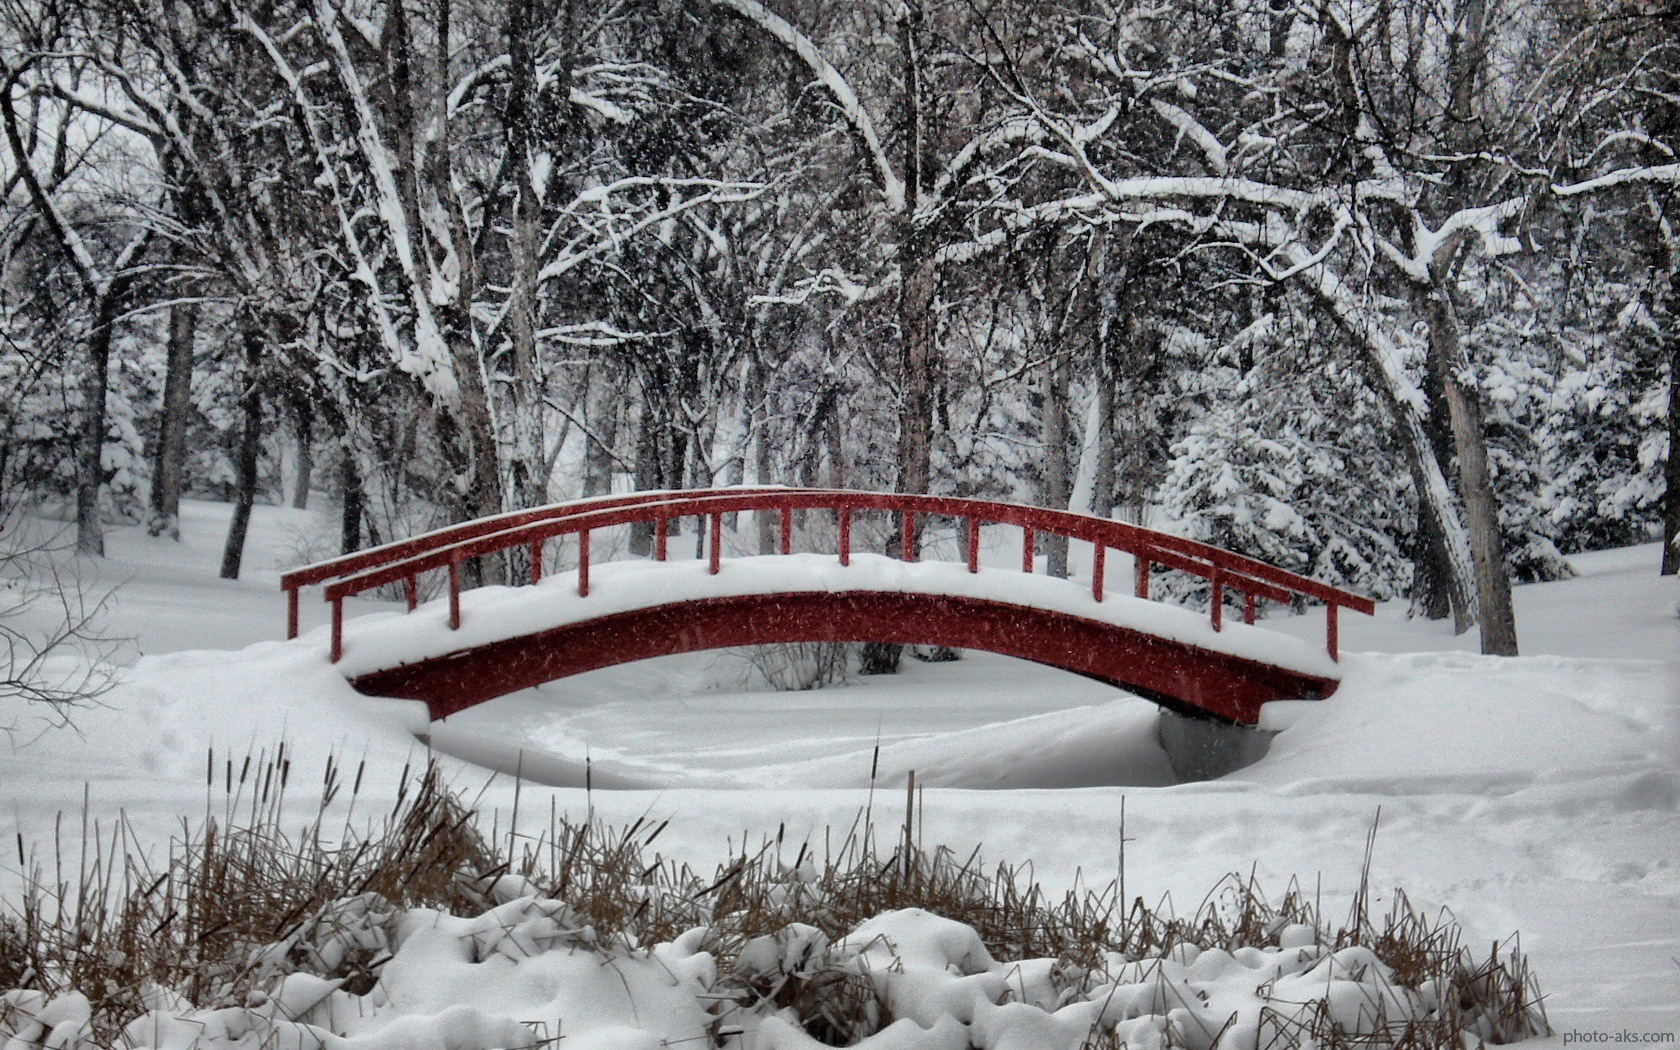 http://pic.photo-aks.com/photo/nature/season/winter/large/park-in-winter.jpg